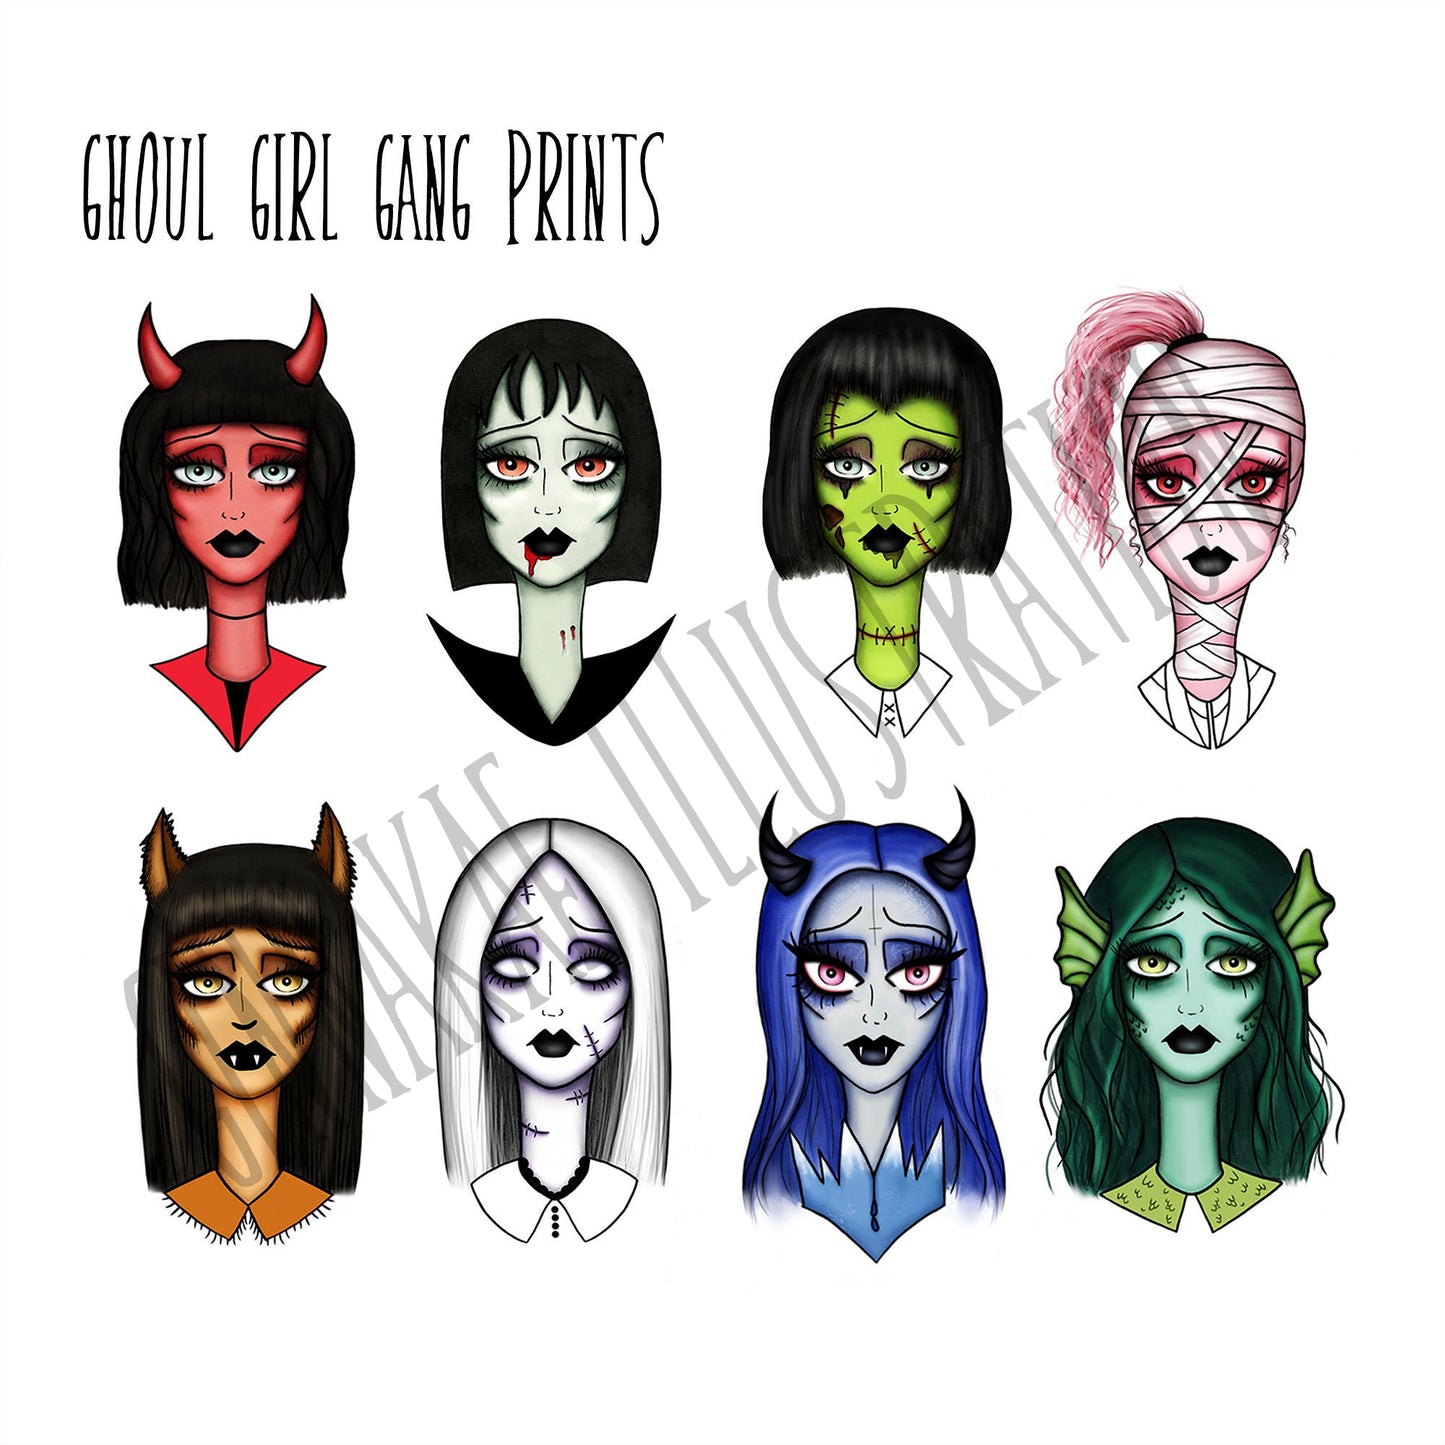 Ghoul Girl Gang 4x6 Inch Prints